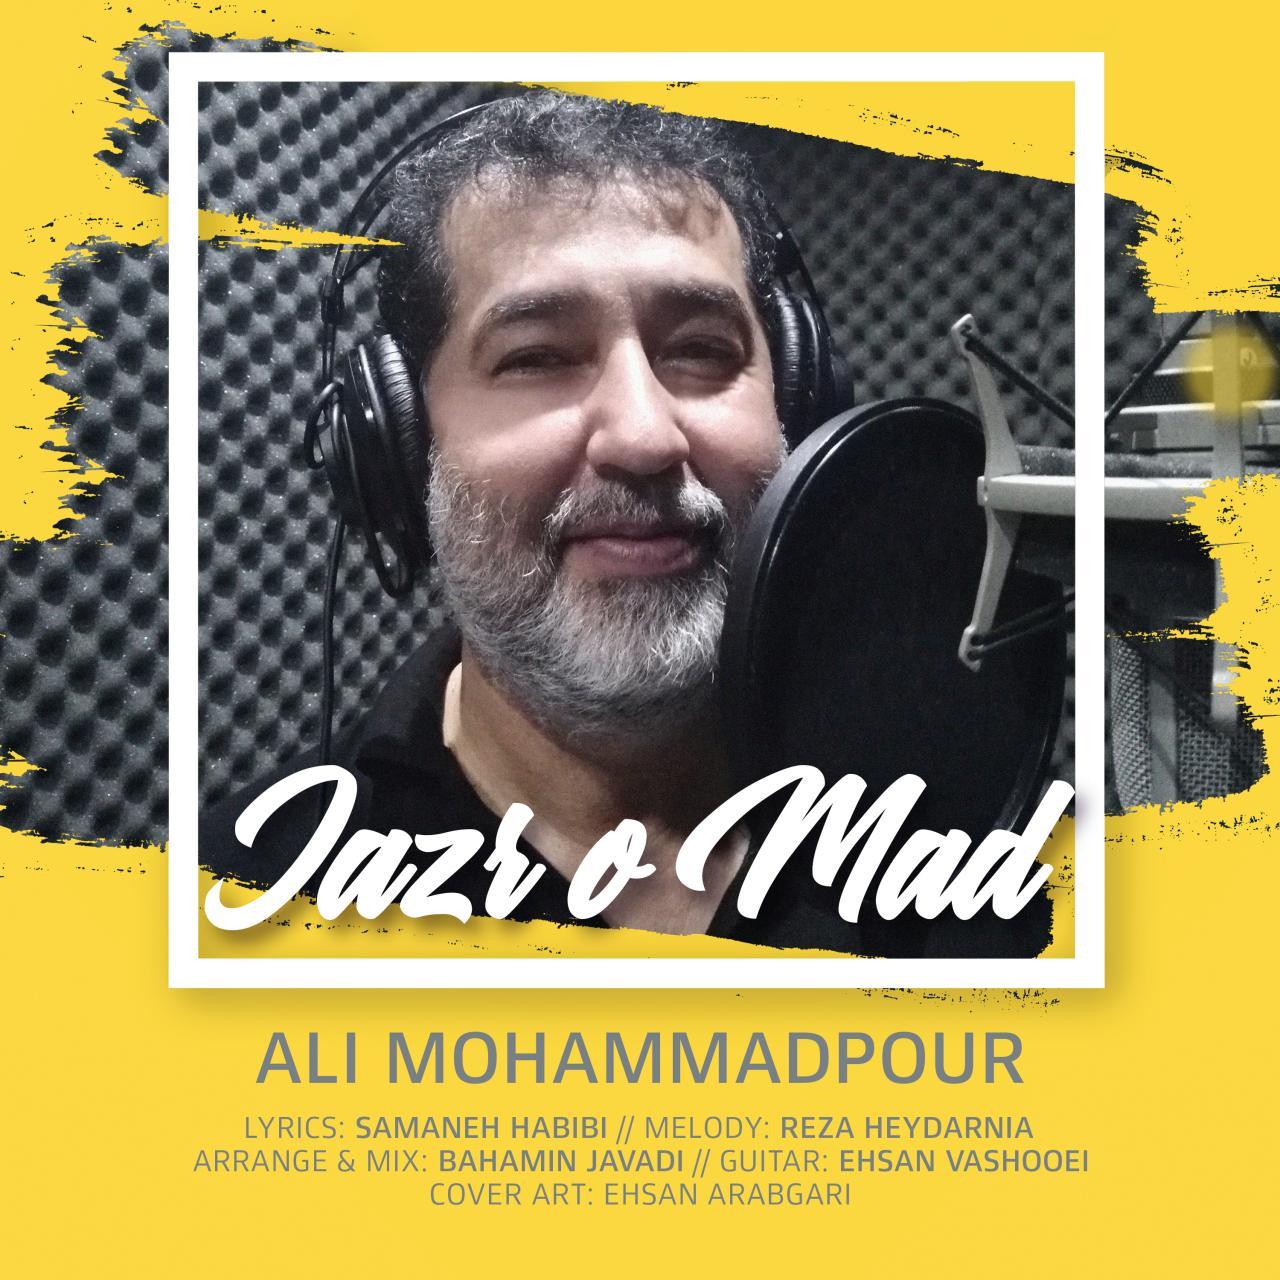 Ali MohammadPoor – Jazr o Mad